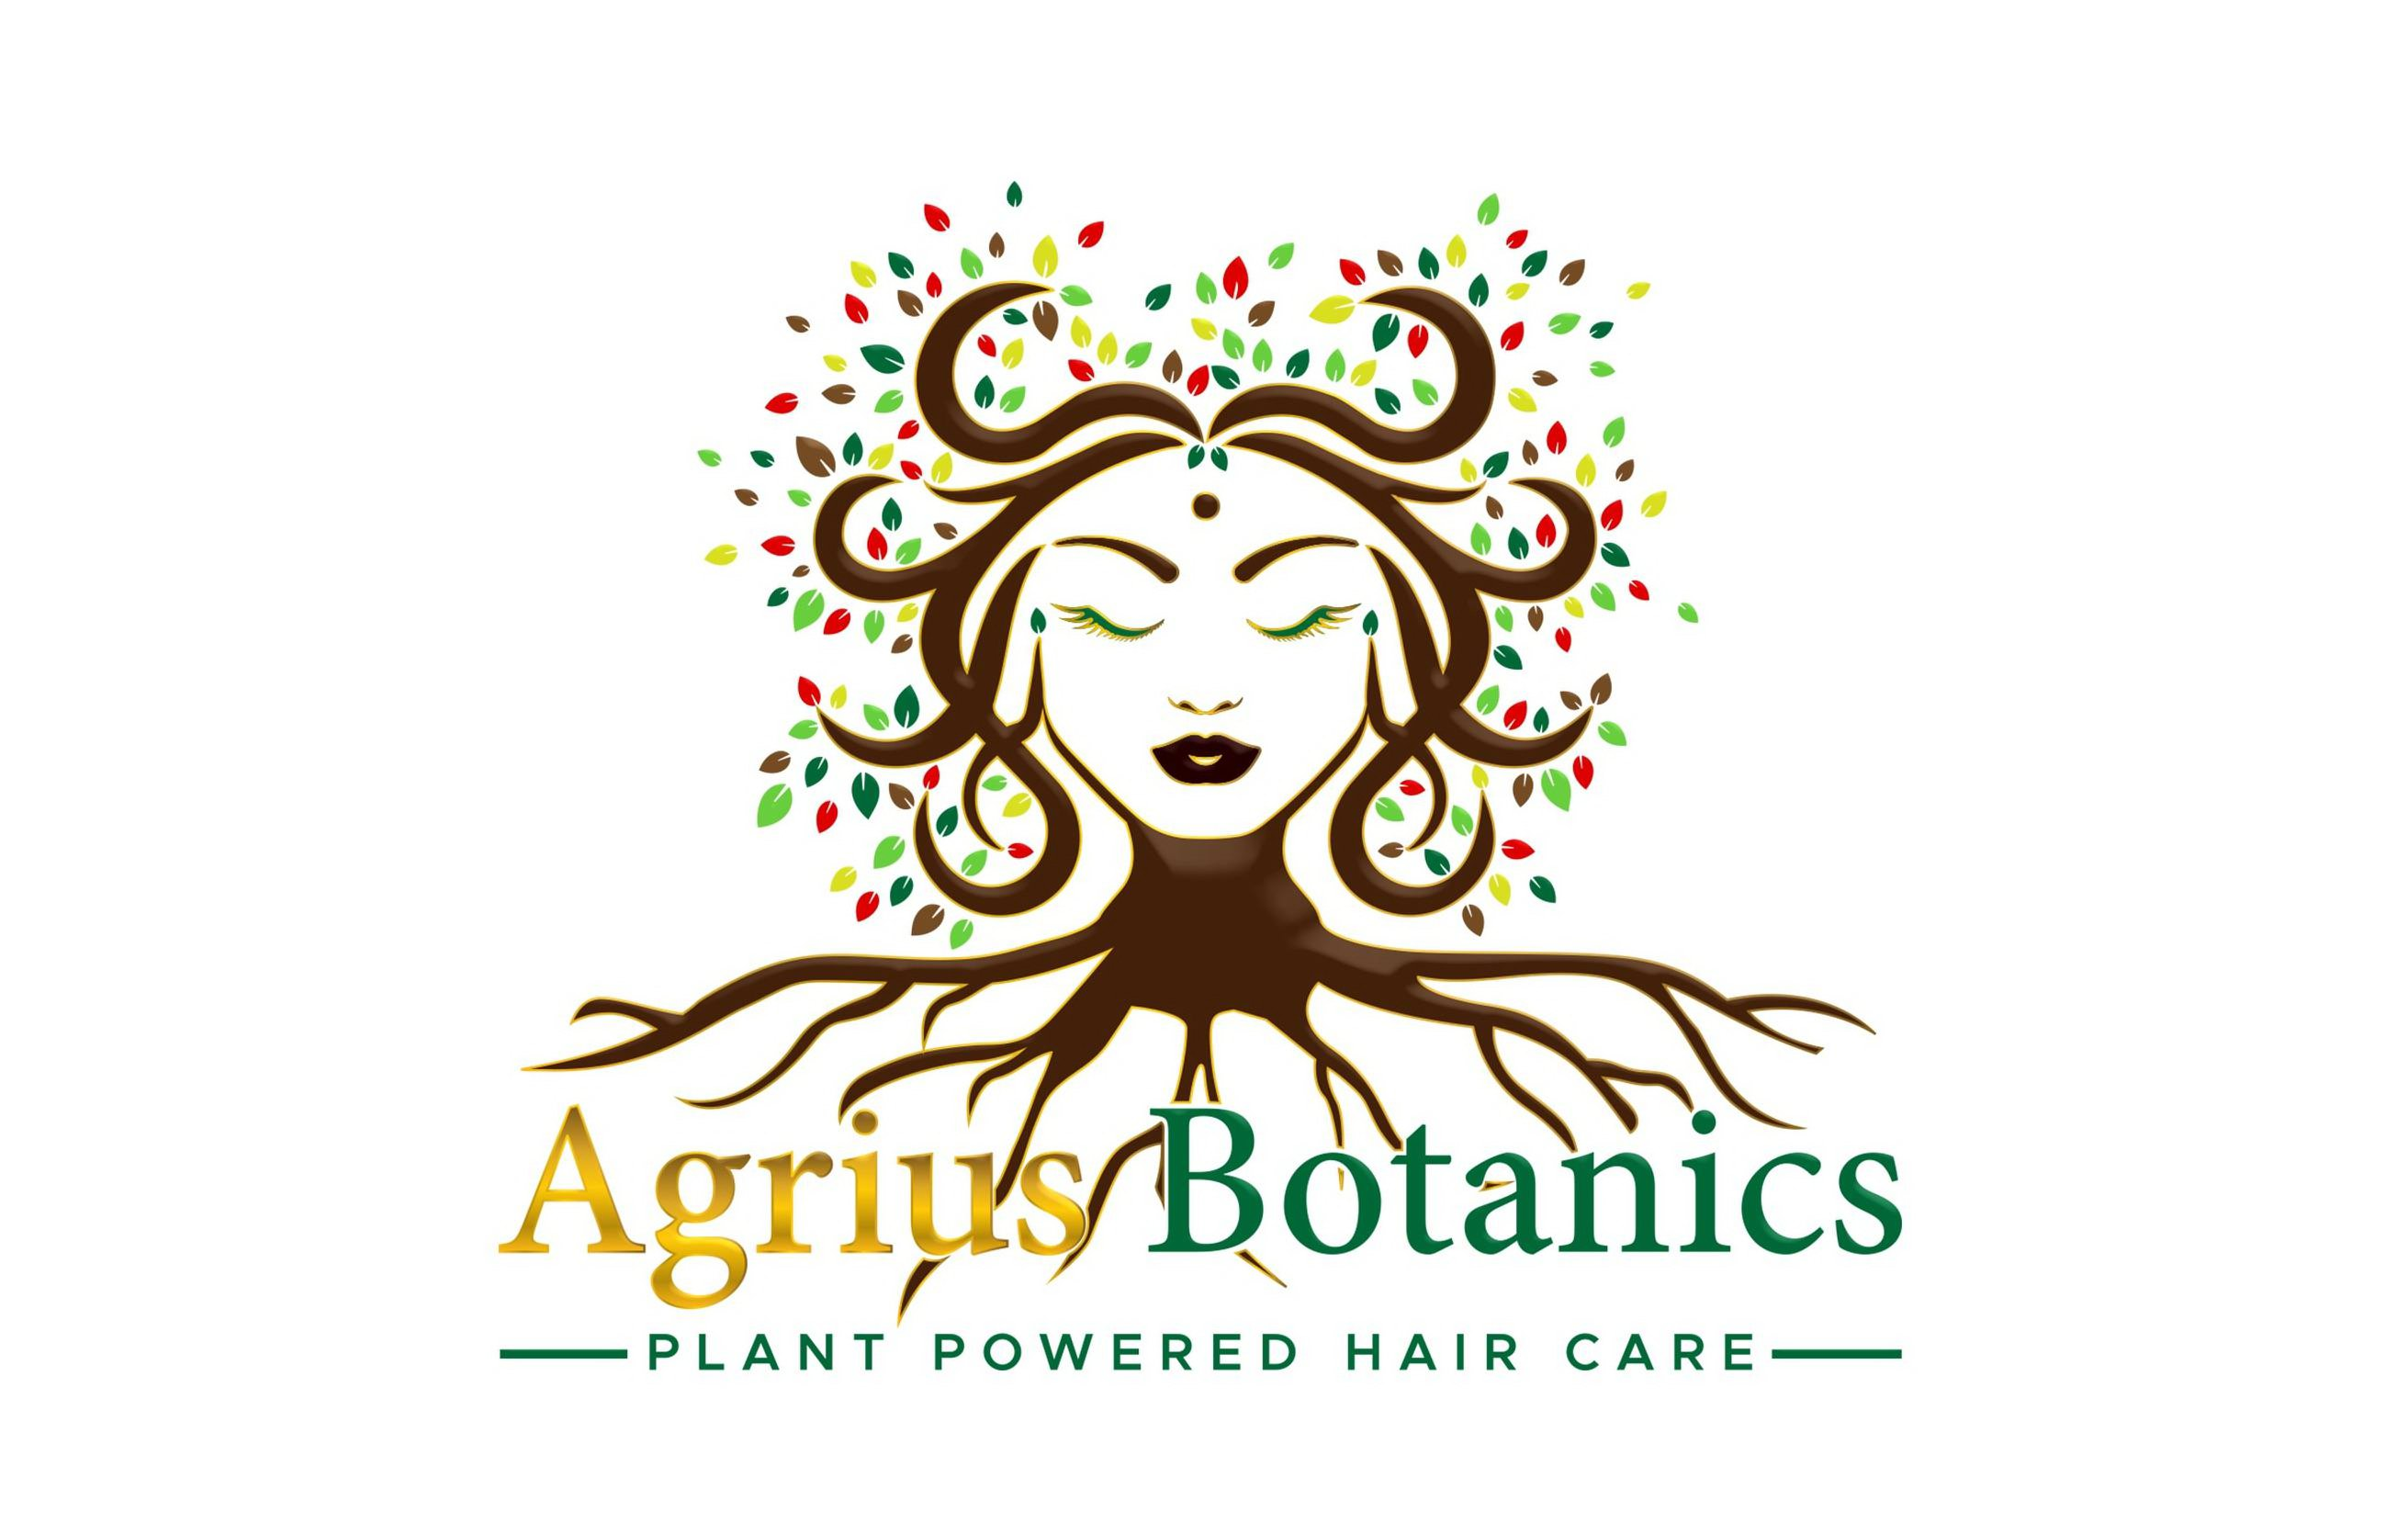  AGRIUS BOTANICS PLANT POWERED HAIR CARE